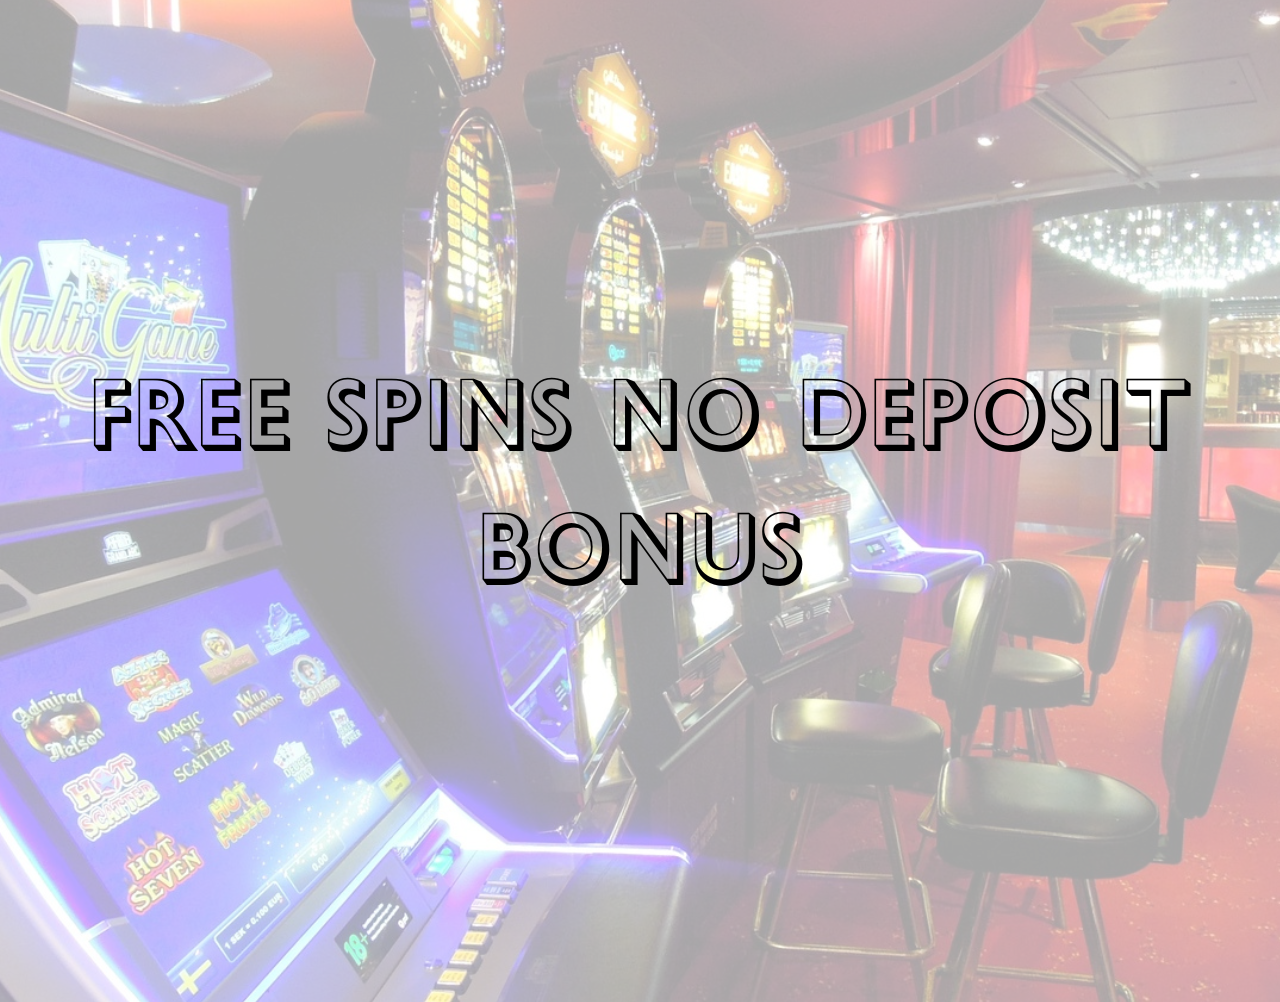 free spins no deposit bonus not on gamstop